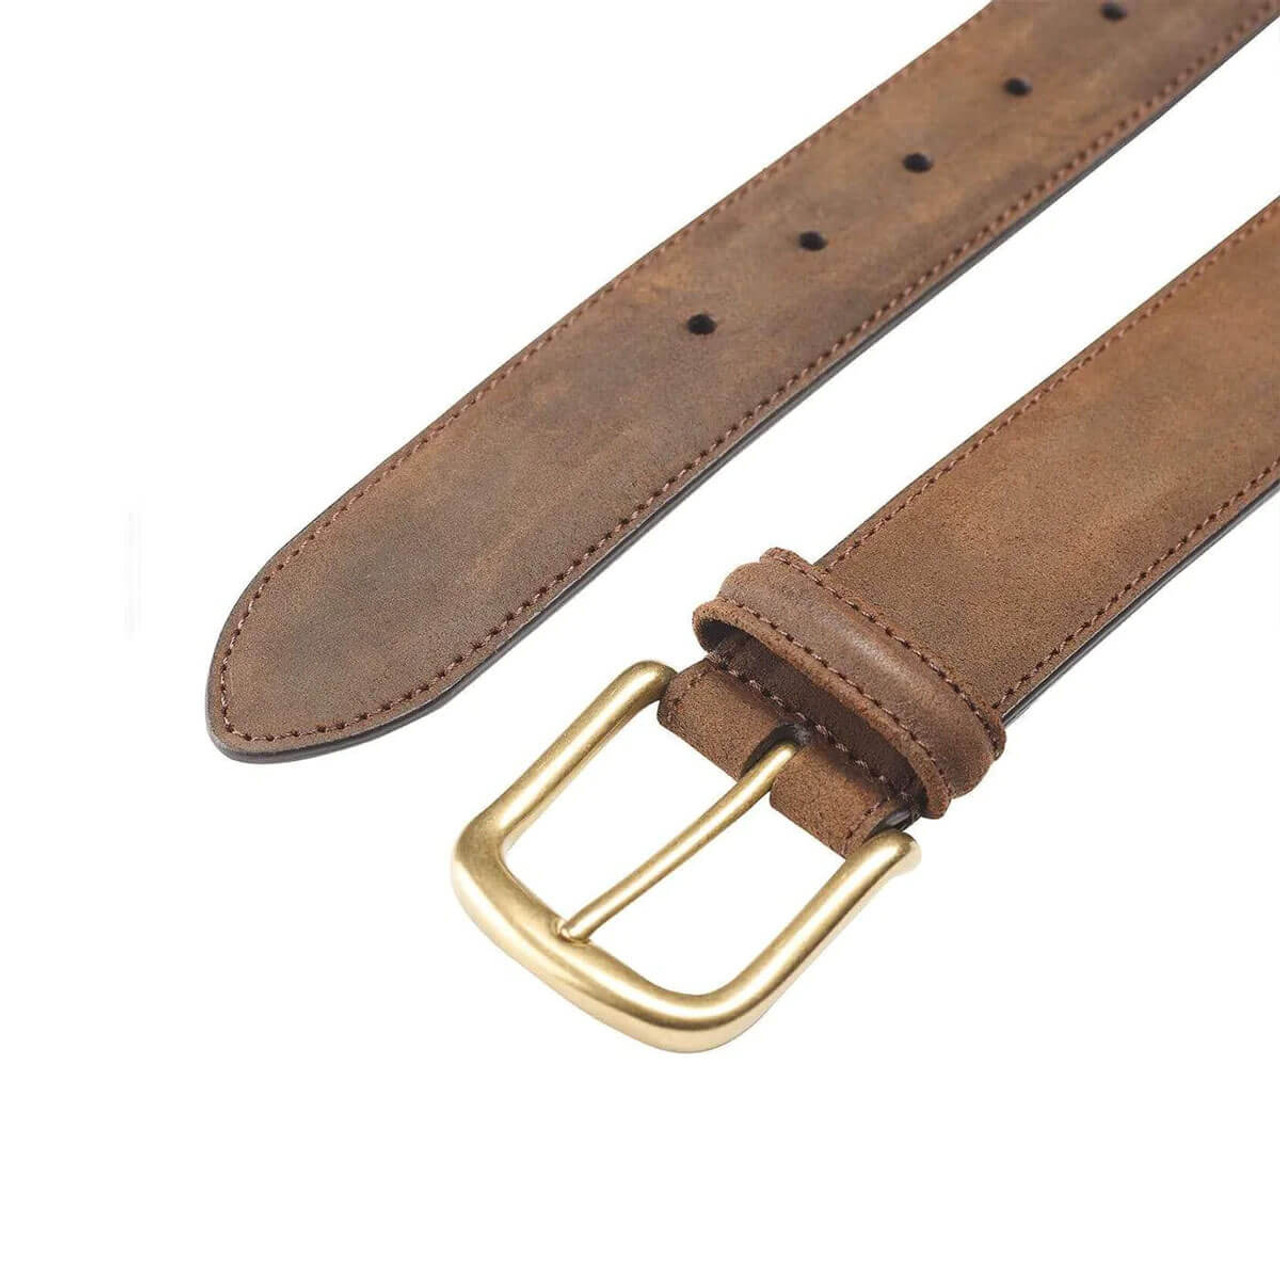 Bark brown suede leather belt